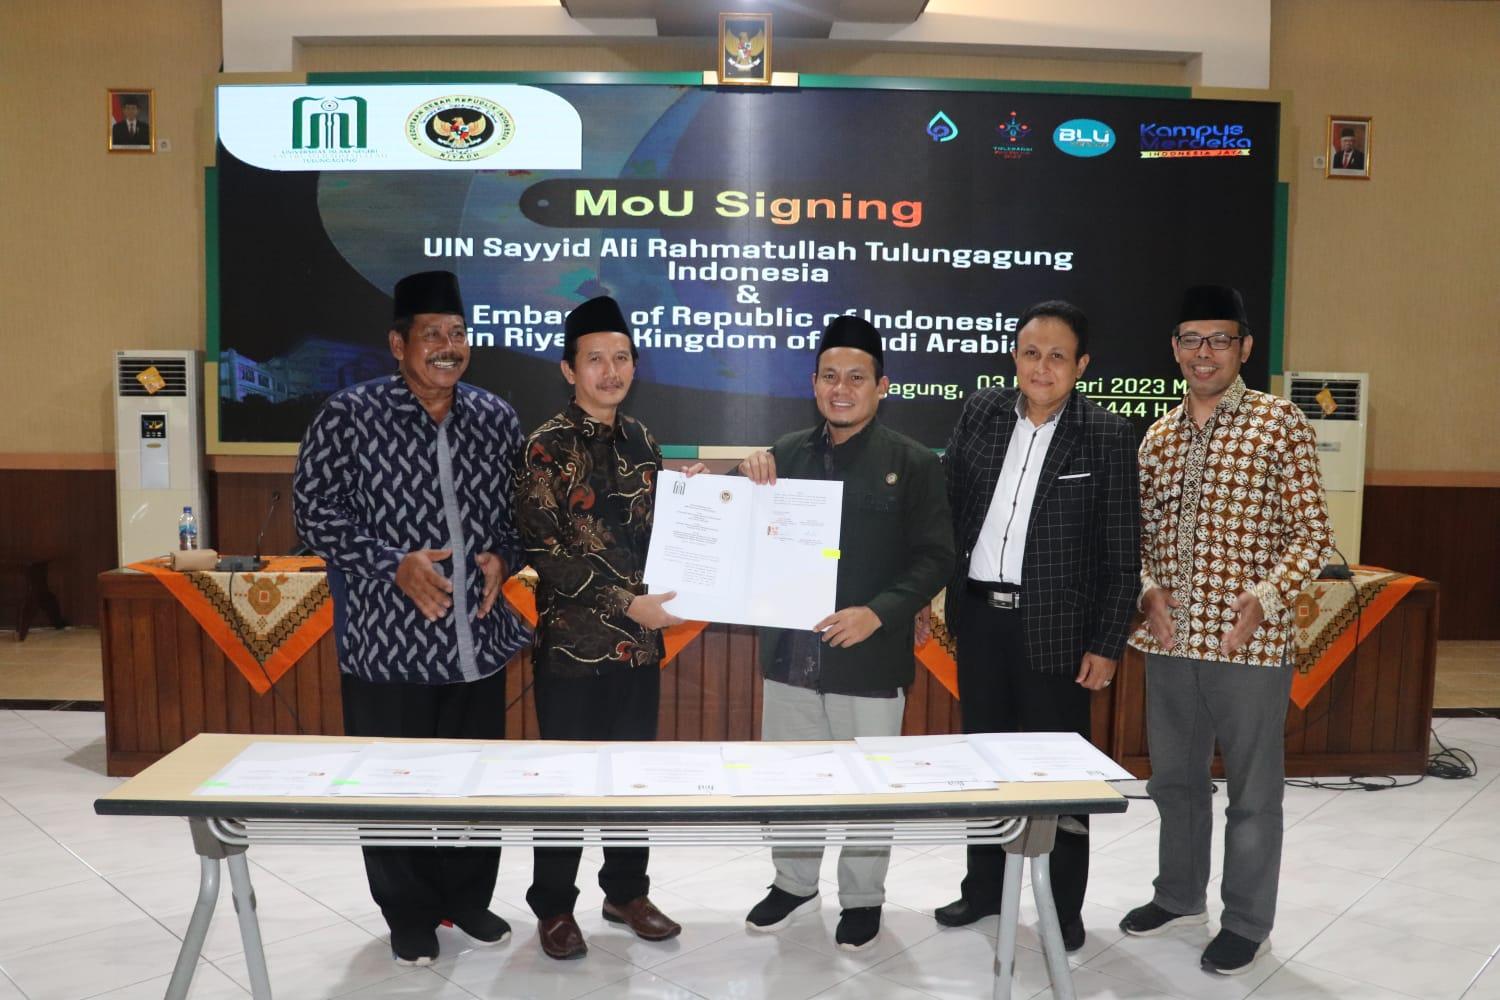 MoU Signing UIN Sayyid Ali Rahmatullah Tulungagung Indonesia & Embassy of Republic of Indonesia in Riyadh, Kingdom of Saudi Arabia